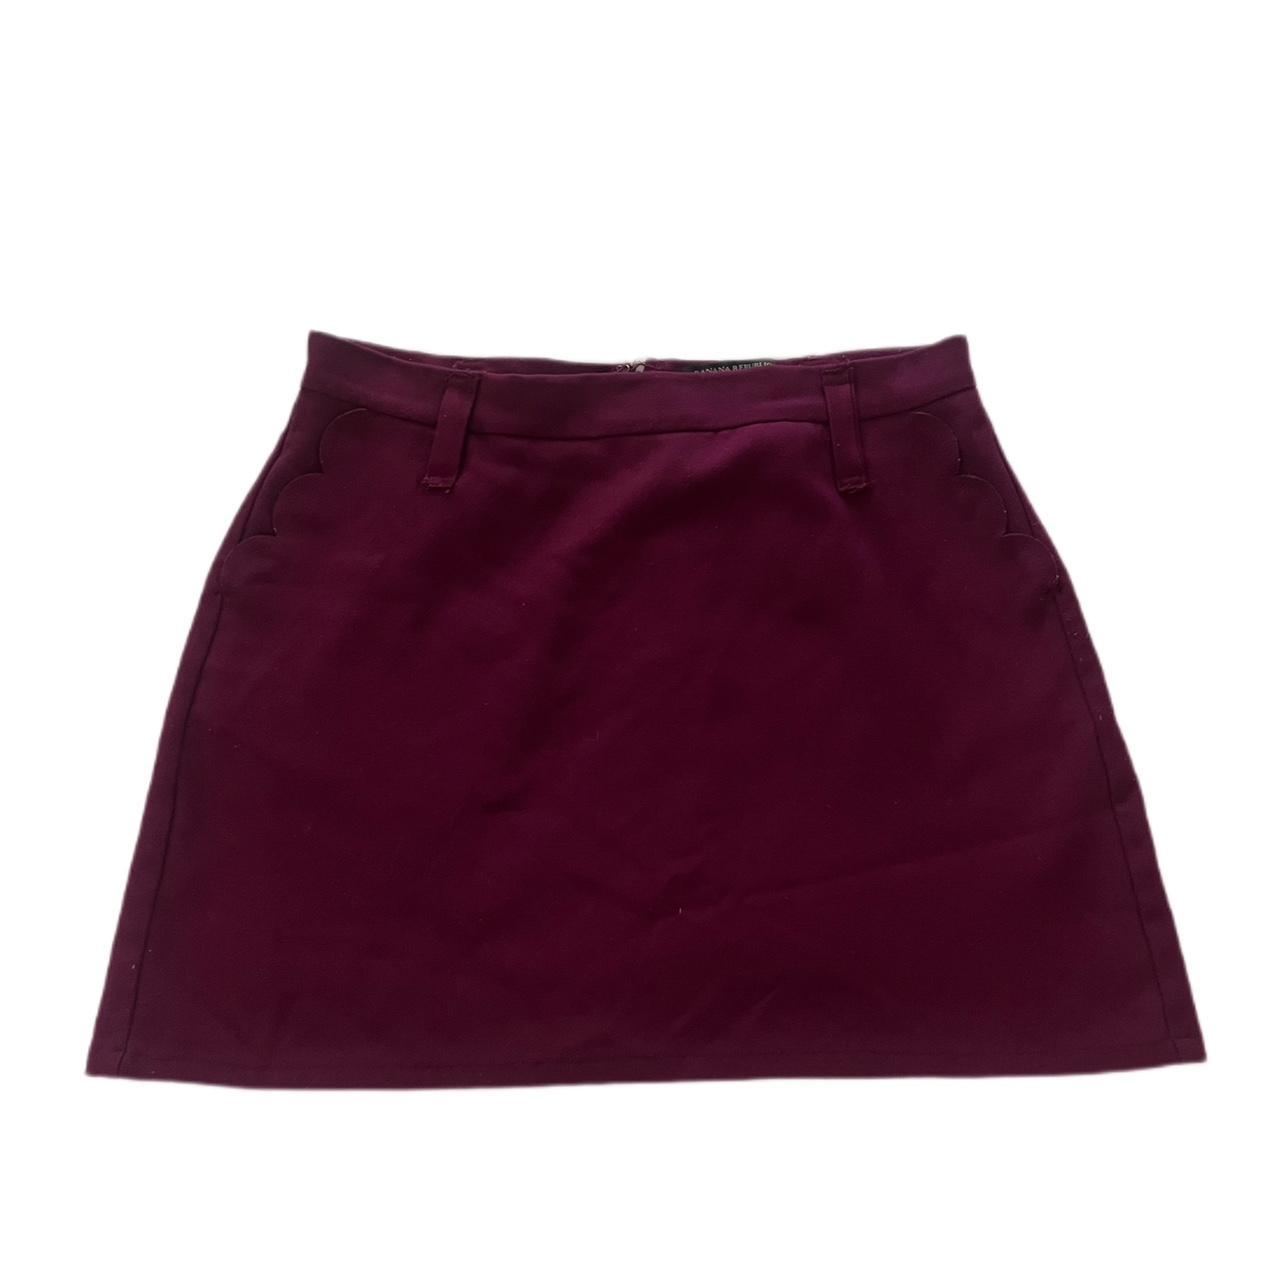 Dark reddish purple skirt Some loose threads that... - Depop